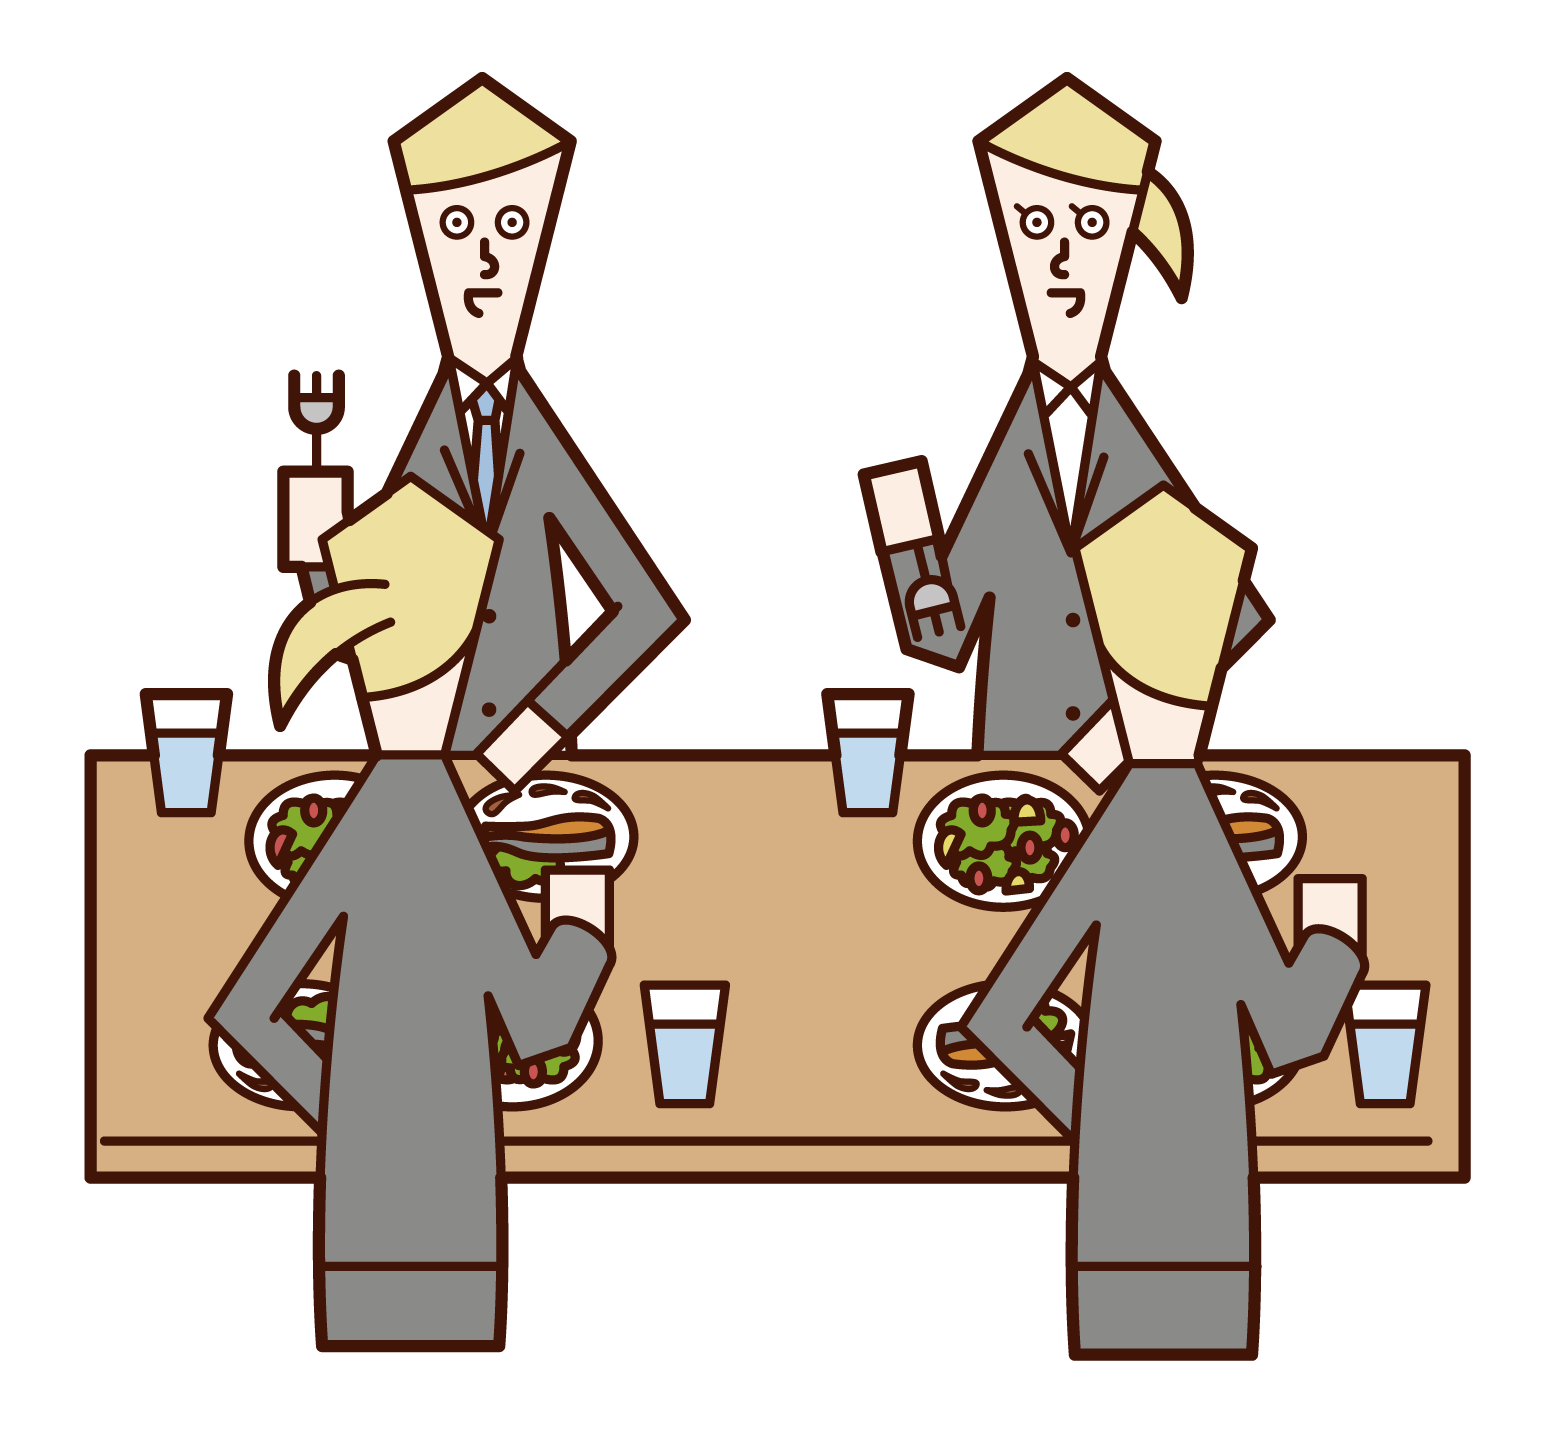 Illustrations of people (men) enjoying lunch